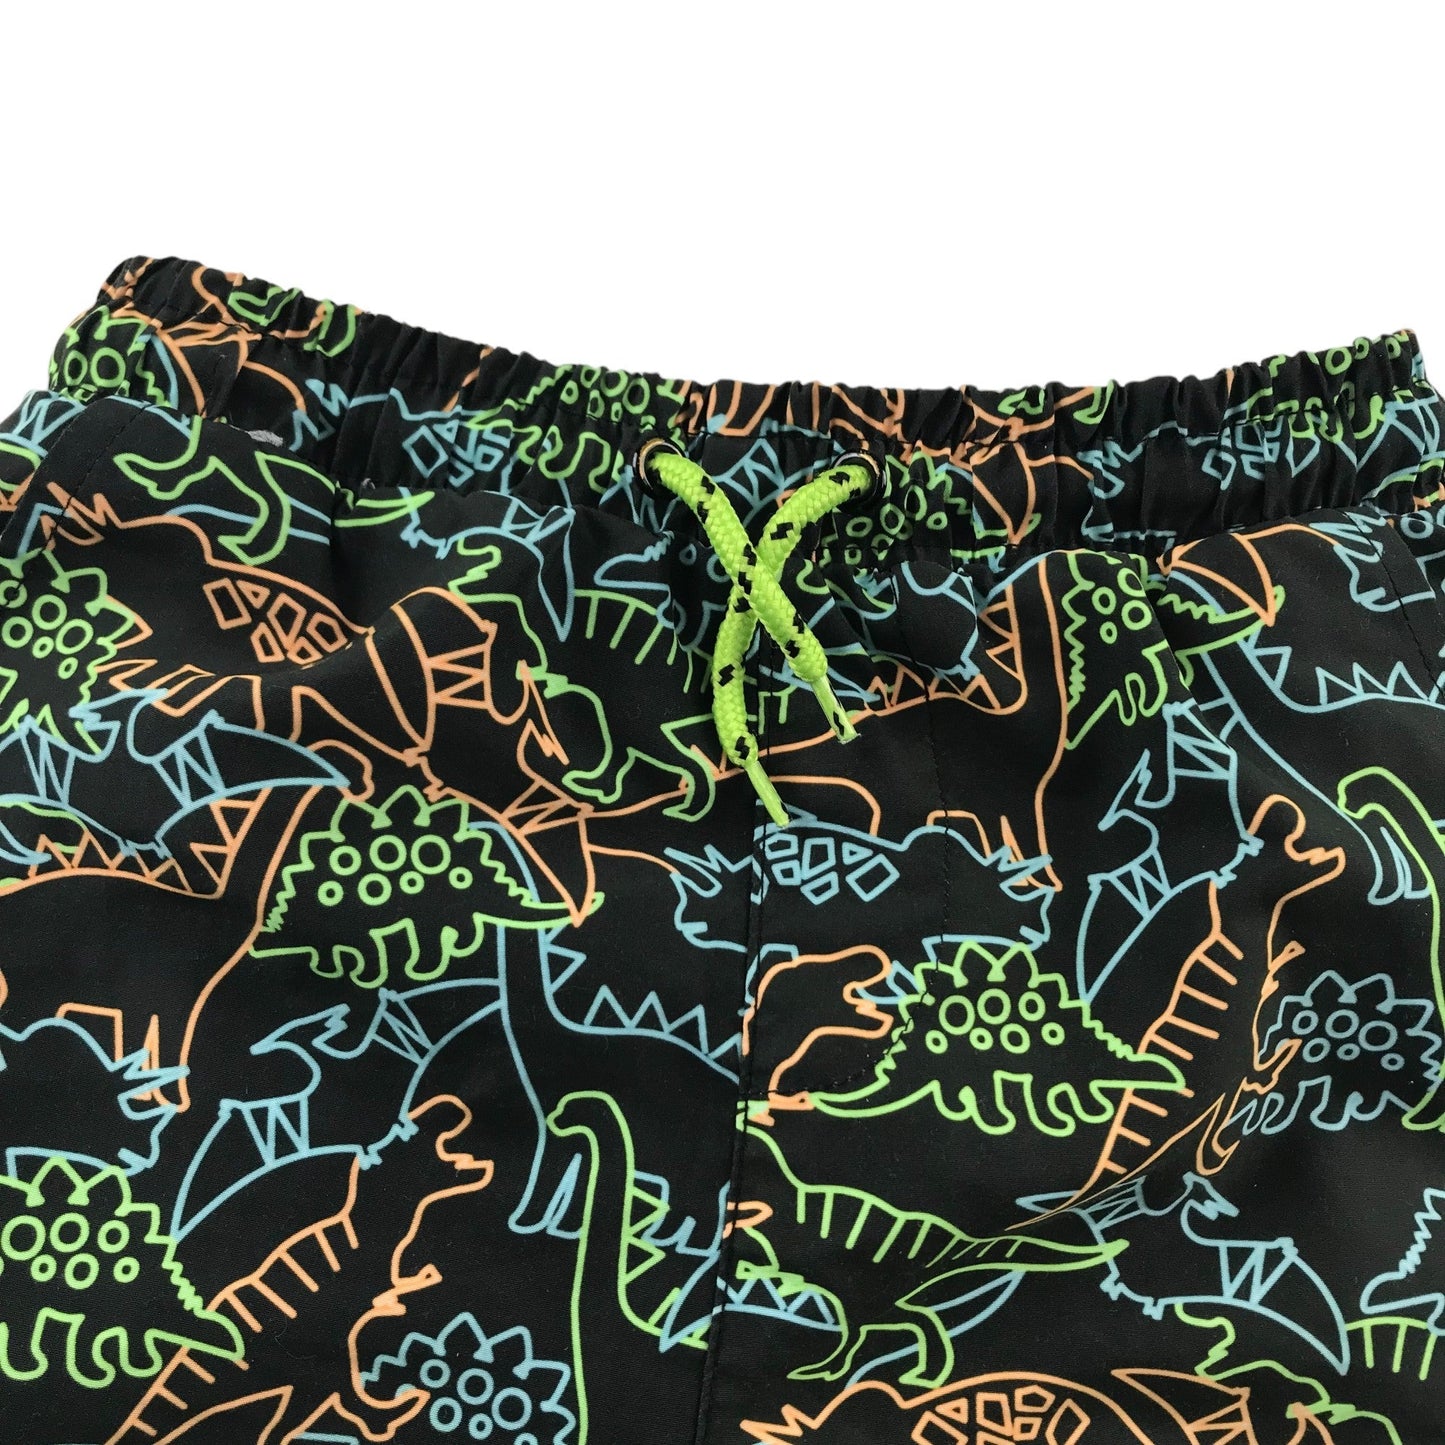 Tu Swim Trunks Age 5 Black and Multicoloured Dinosaur Print Shorts